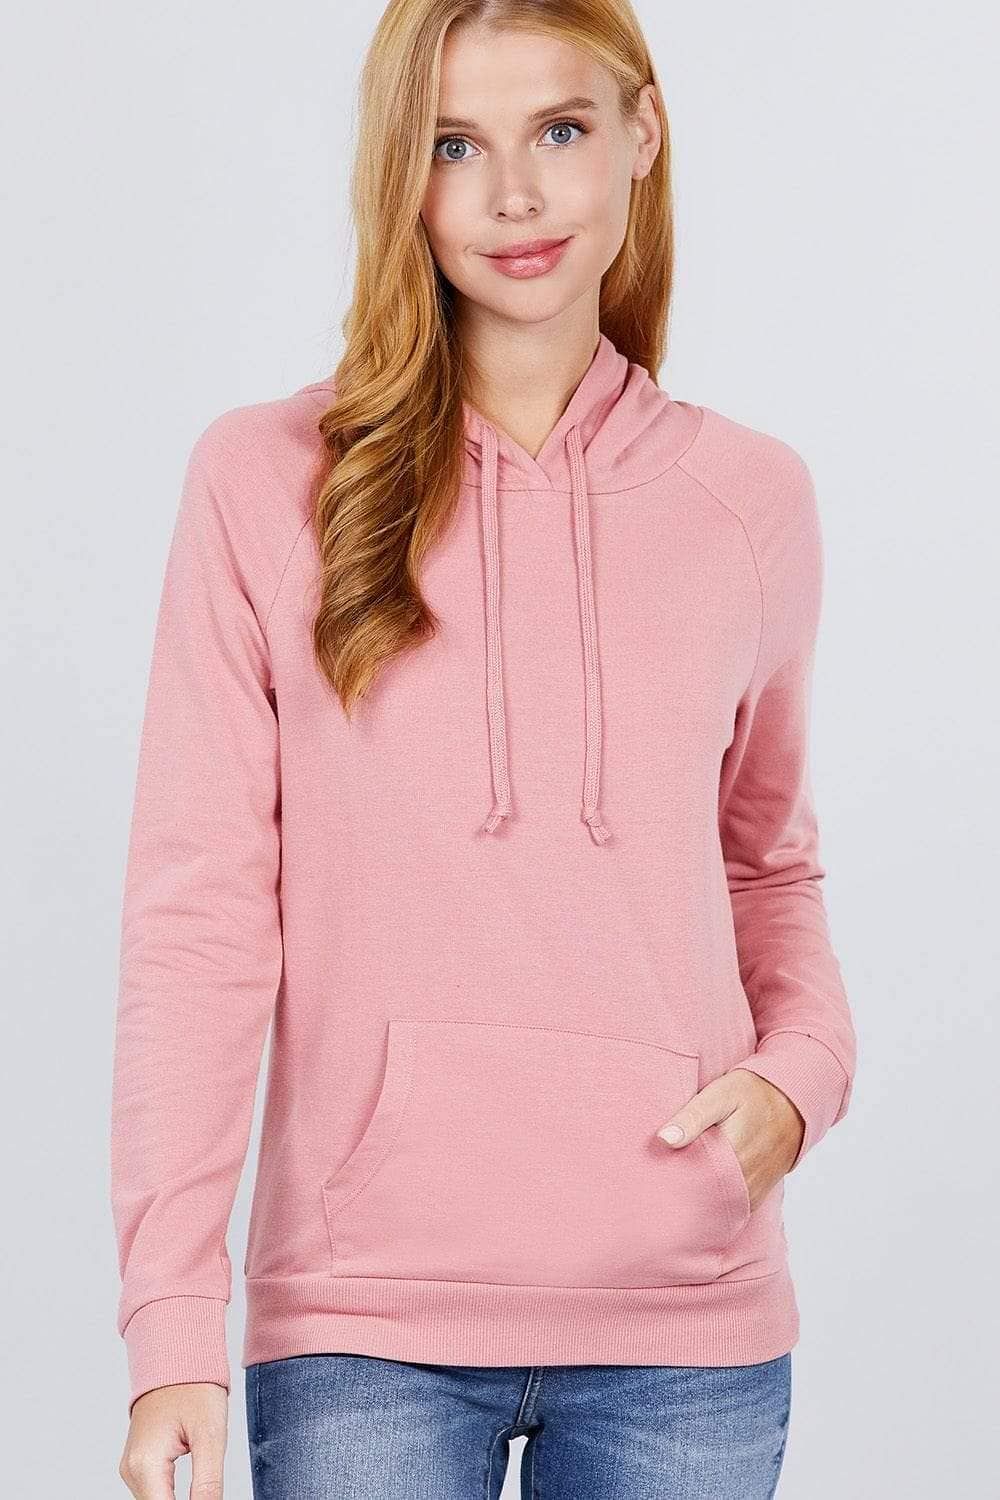 Pink Long Sleeve French Terry Sweatshirt - Shopping Therapy, LLC Sweatshirt